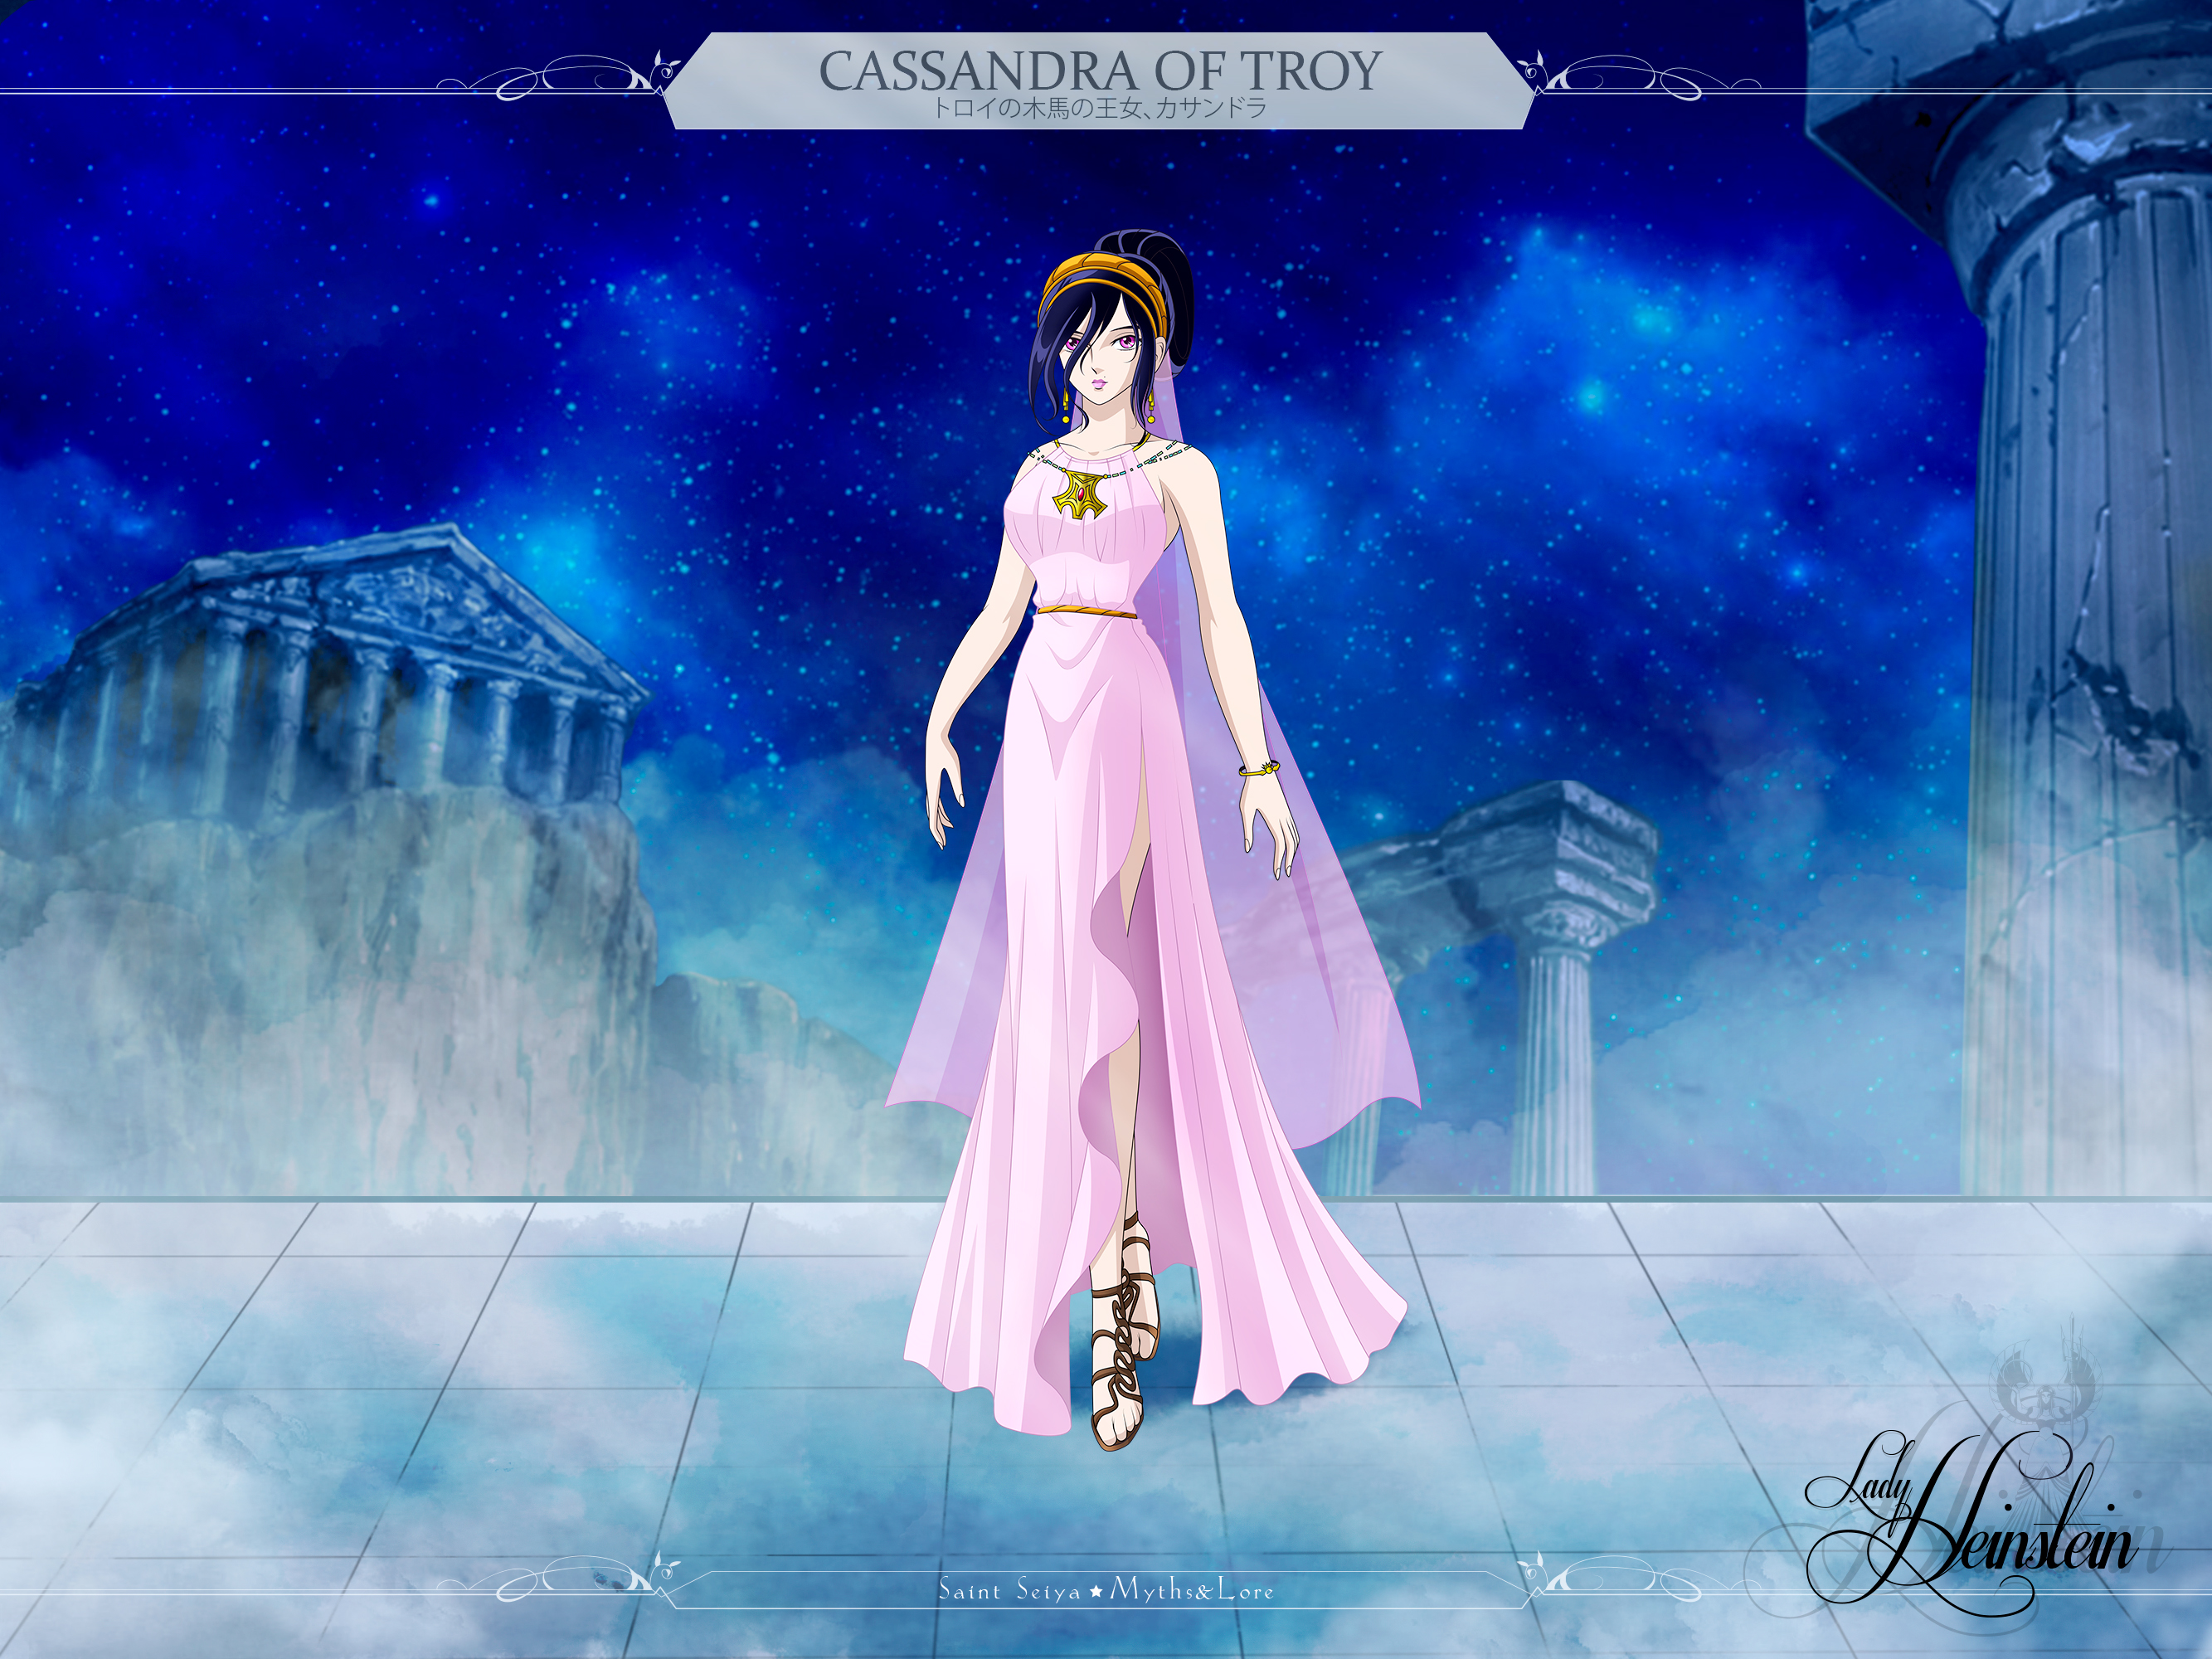 Princess Cassandra of Troy